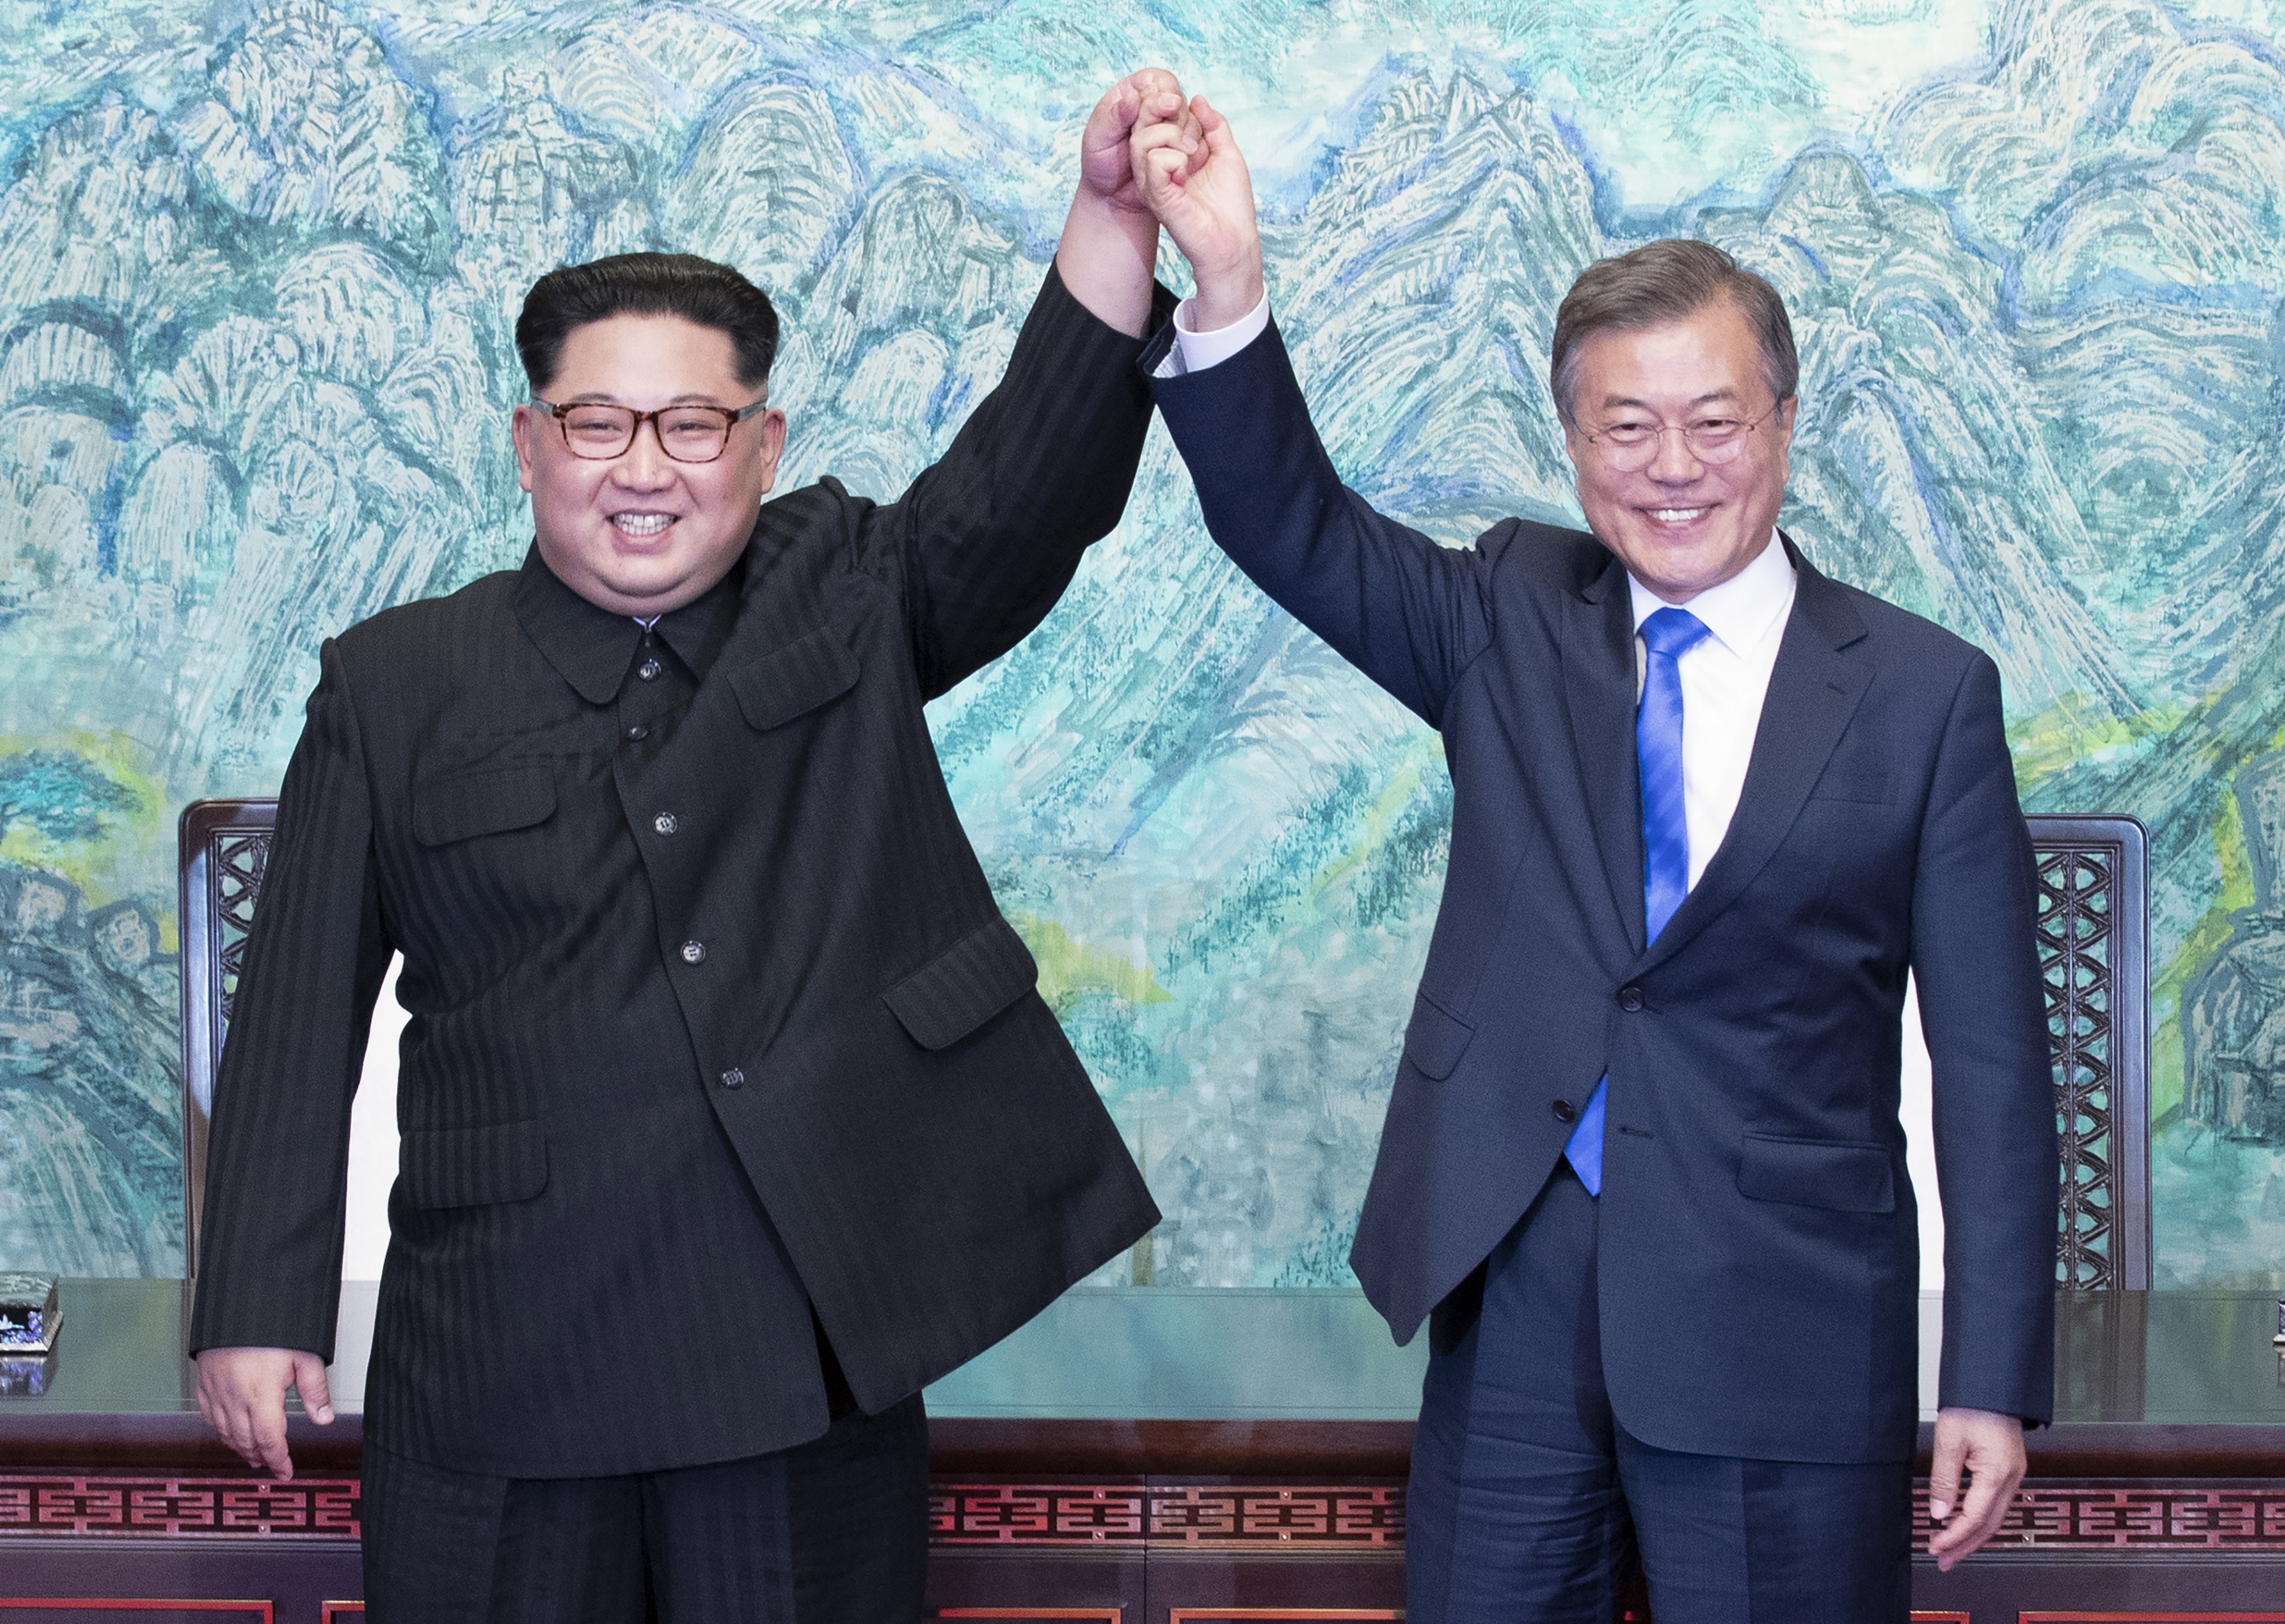 noord korea zuid korea dondald trump nobelprijs vrede